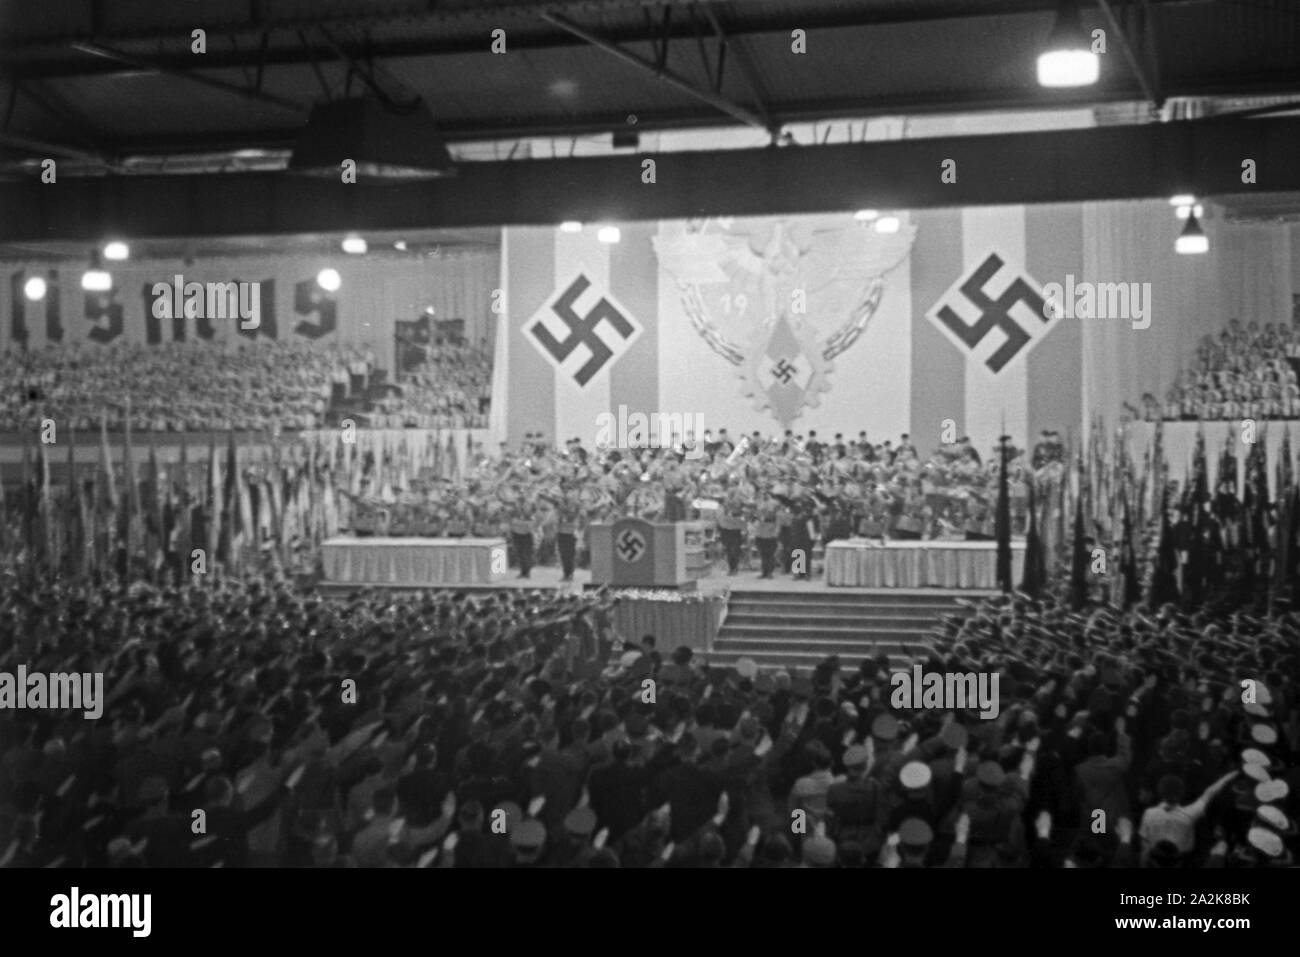 Parteiveranstaltung der NSDAP für den Reichssieger 1936 HJ, Deutschland 1930 er Jahre. Parti nazi d'activité pour la jeunesse hitlerienne Reichssieger 1936 Concurrence, Allemagne 1930. Banque D'Images